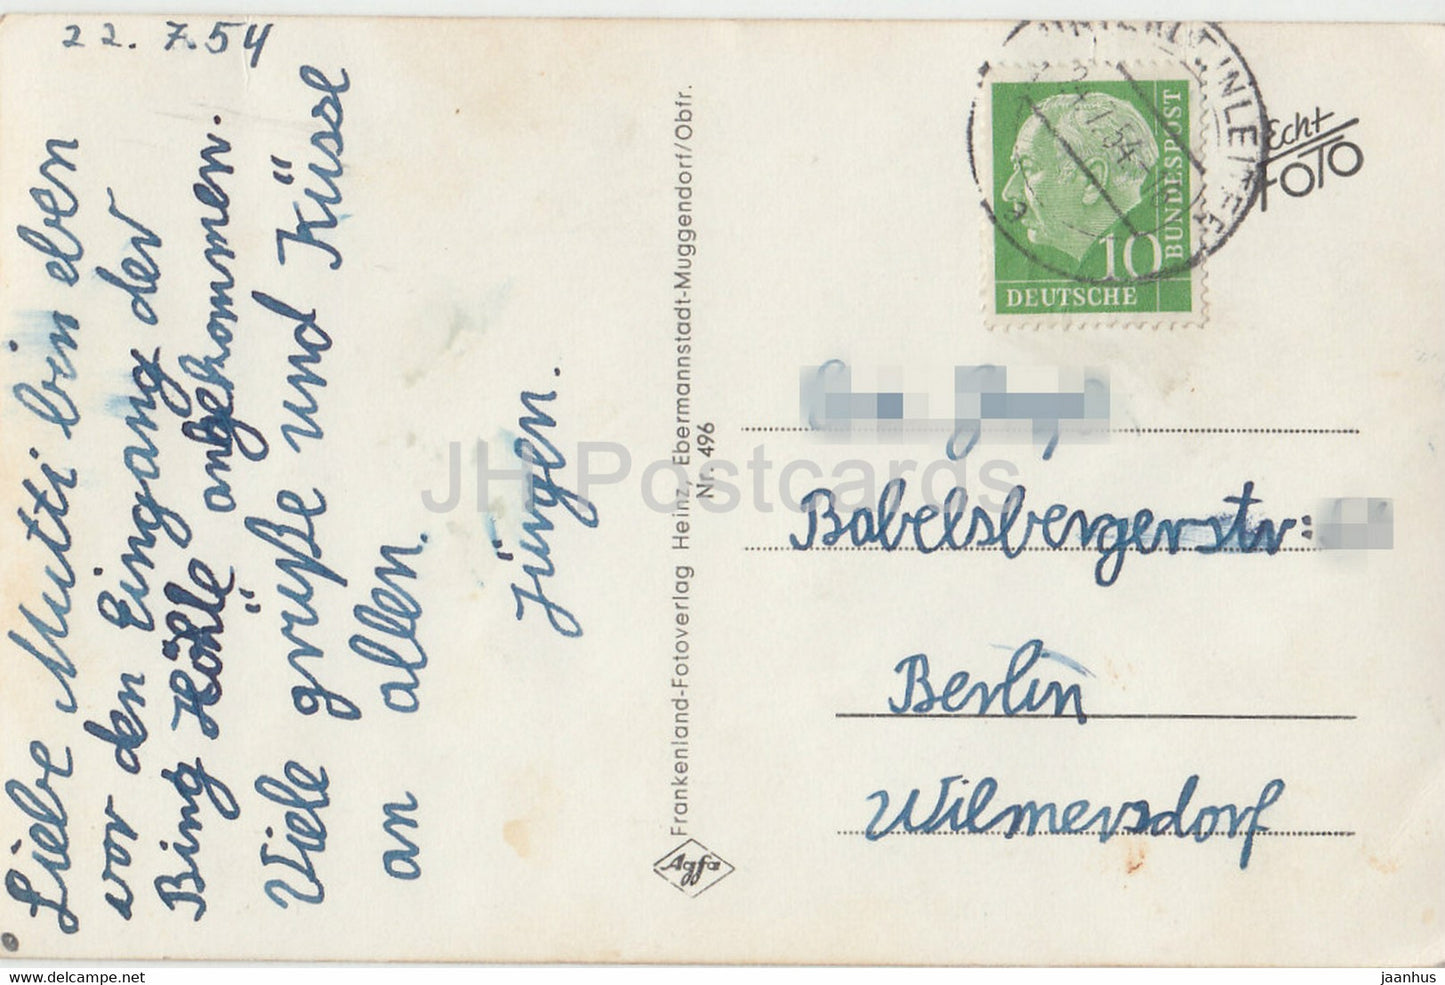 Bing Hohle - Streitberg - Venusgrotte - cave - 496 - old postcard - 1954 - Germany - used